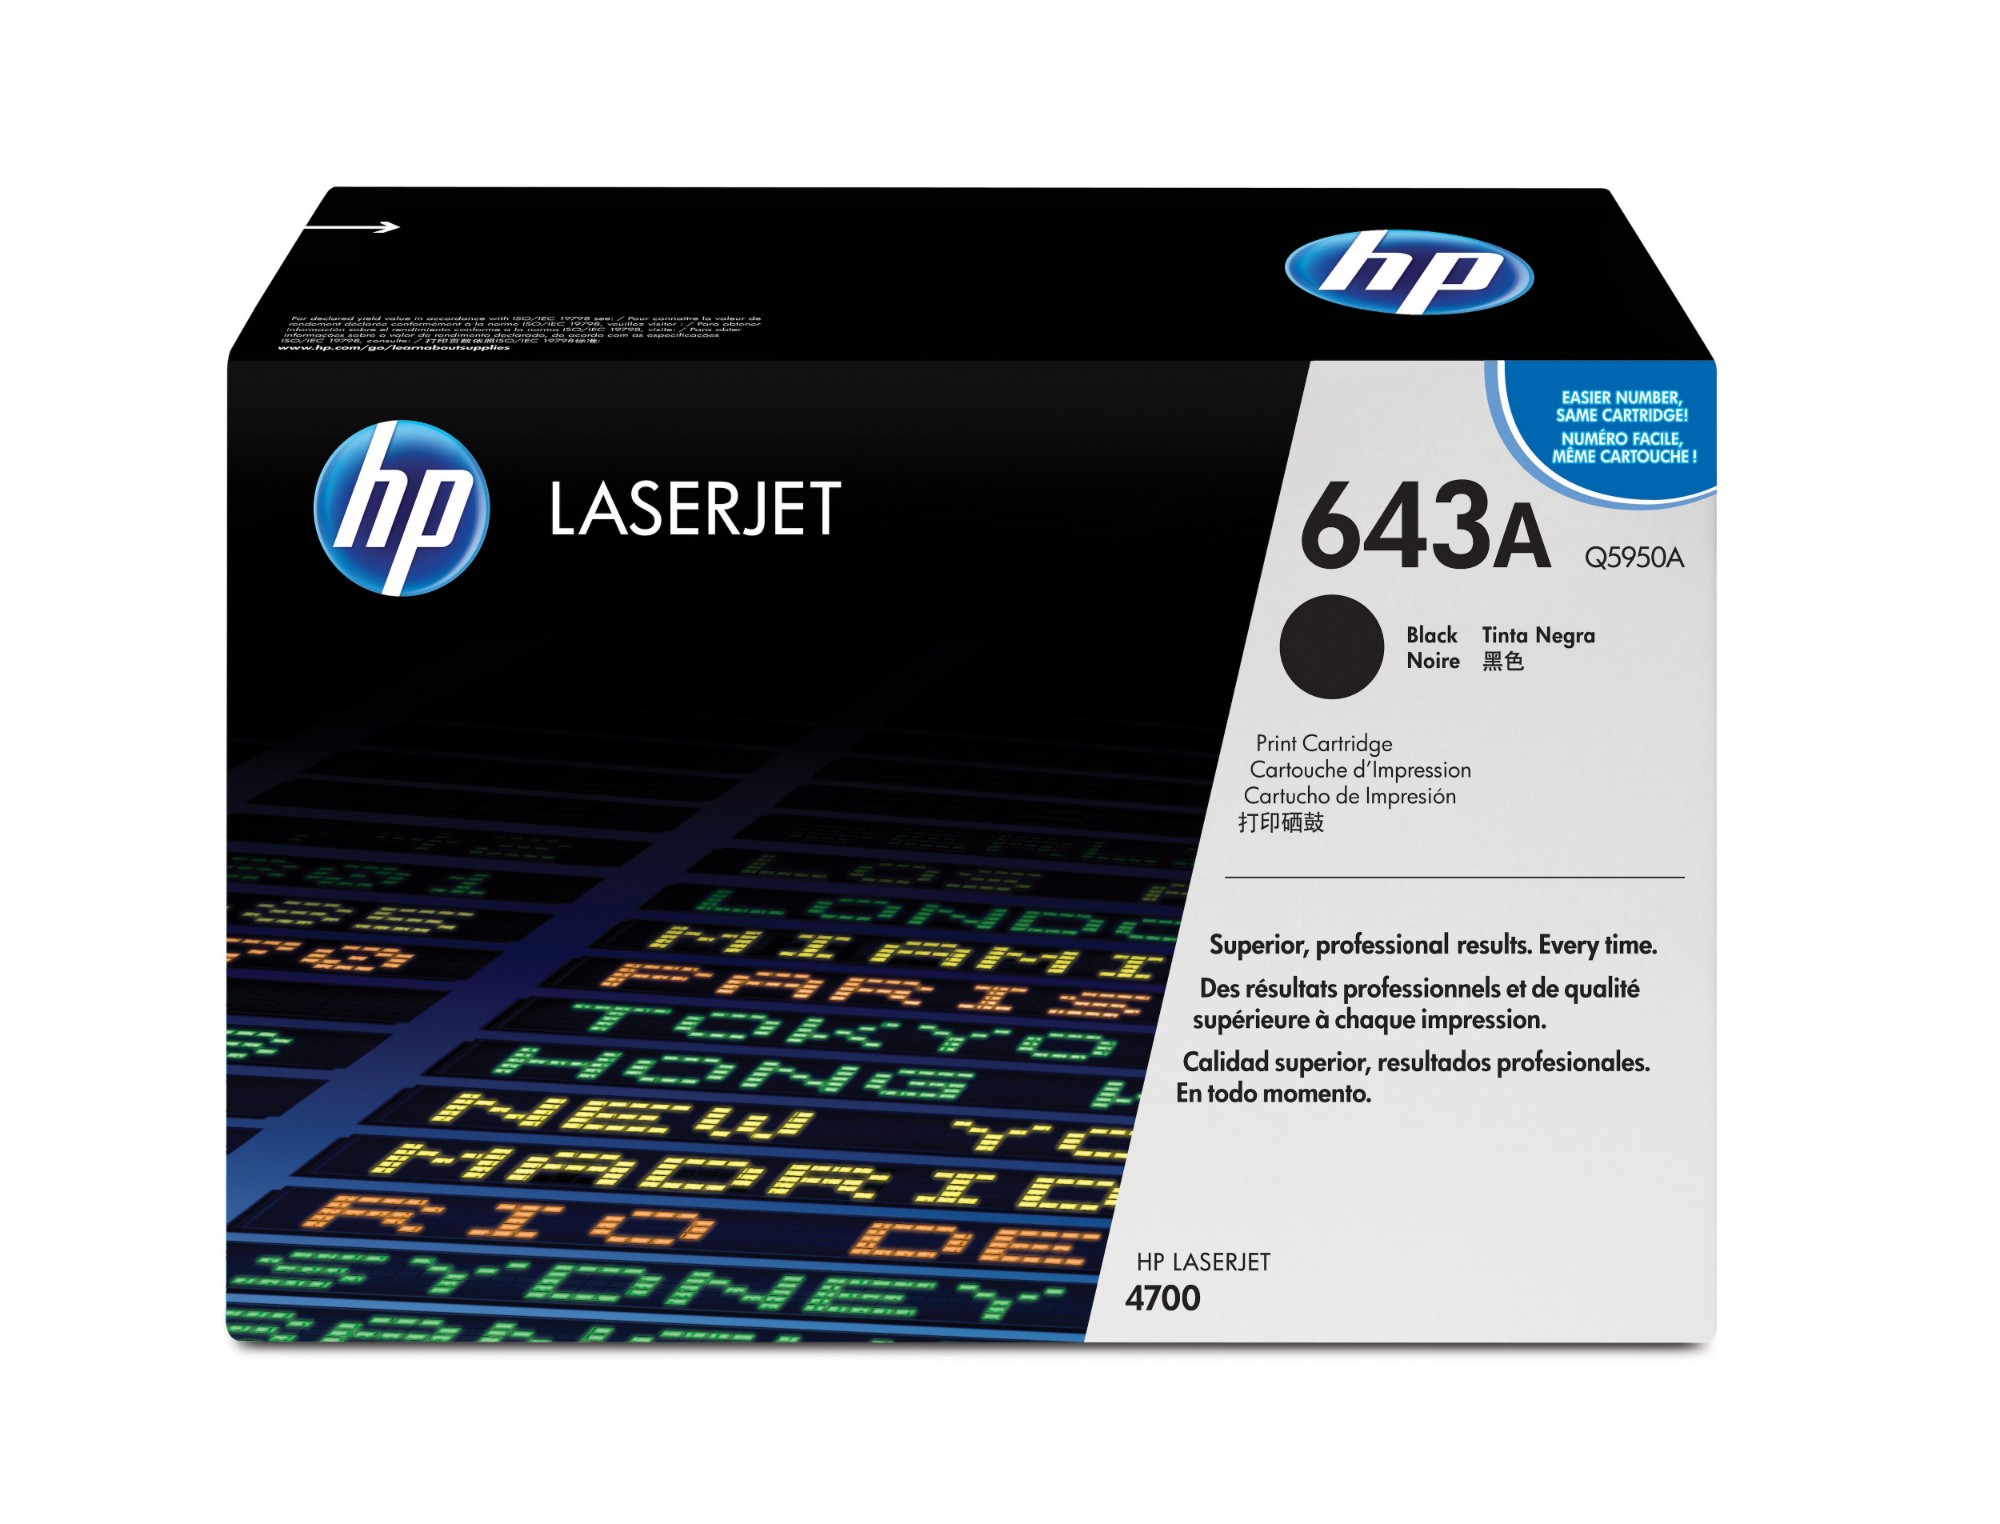 HP Q5950A/643A Toner cartridge black, 11K pages/5% for HP Color LaserJet 4700